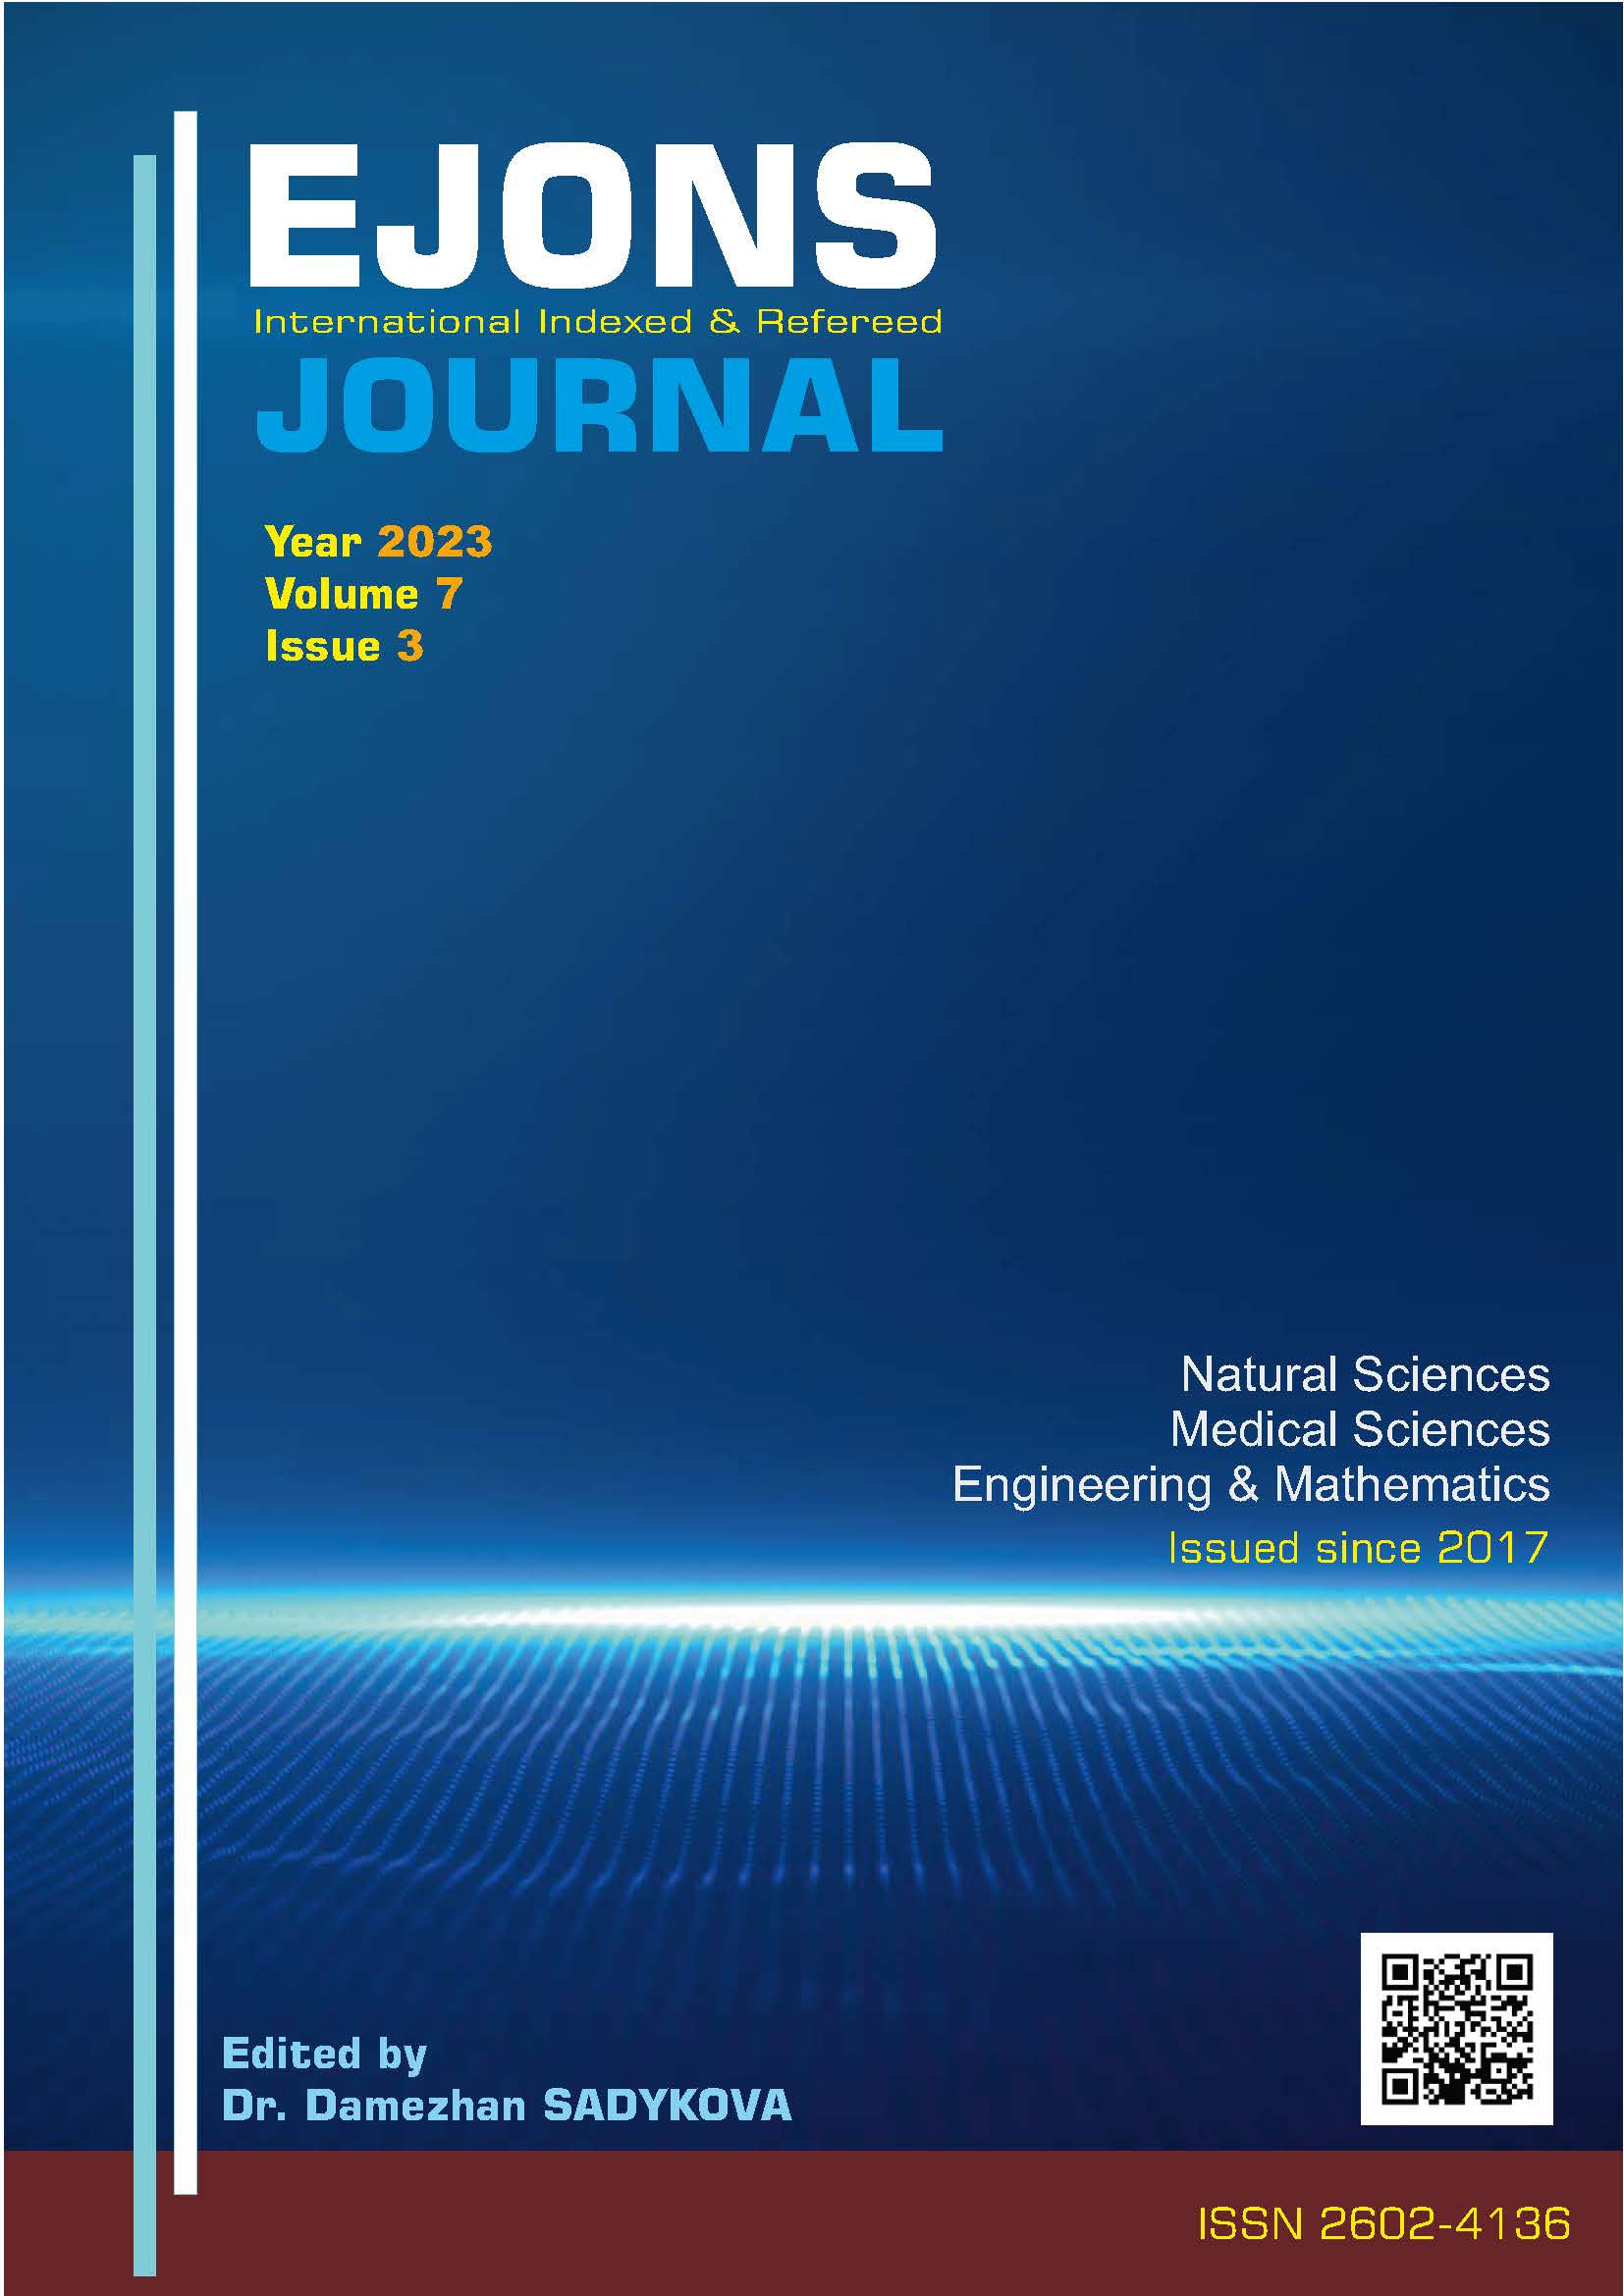 					Cilt 7 Sayı 3 (2023): EJONS Journal Volume 7 Issue 3 Gör
				